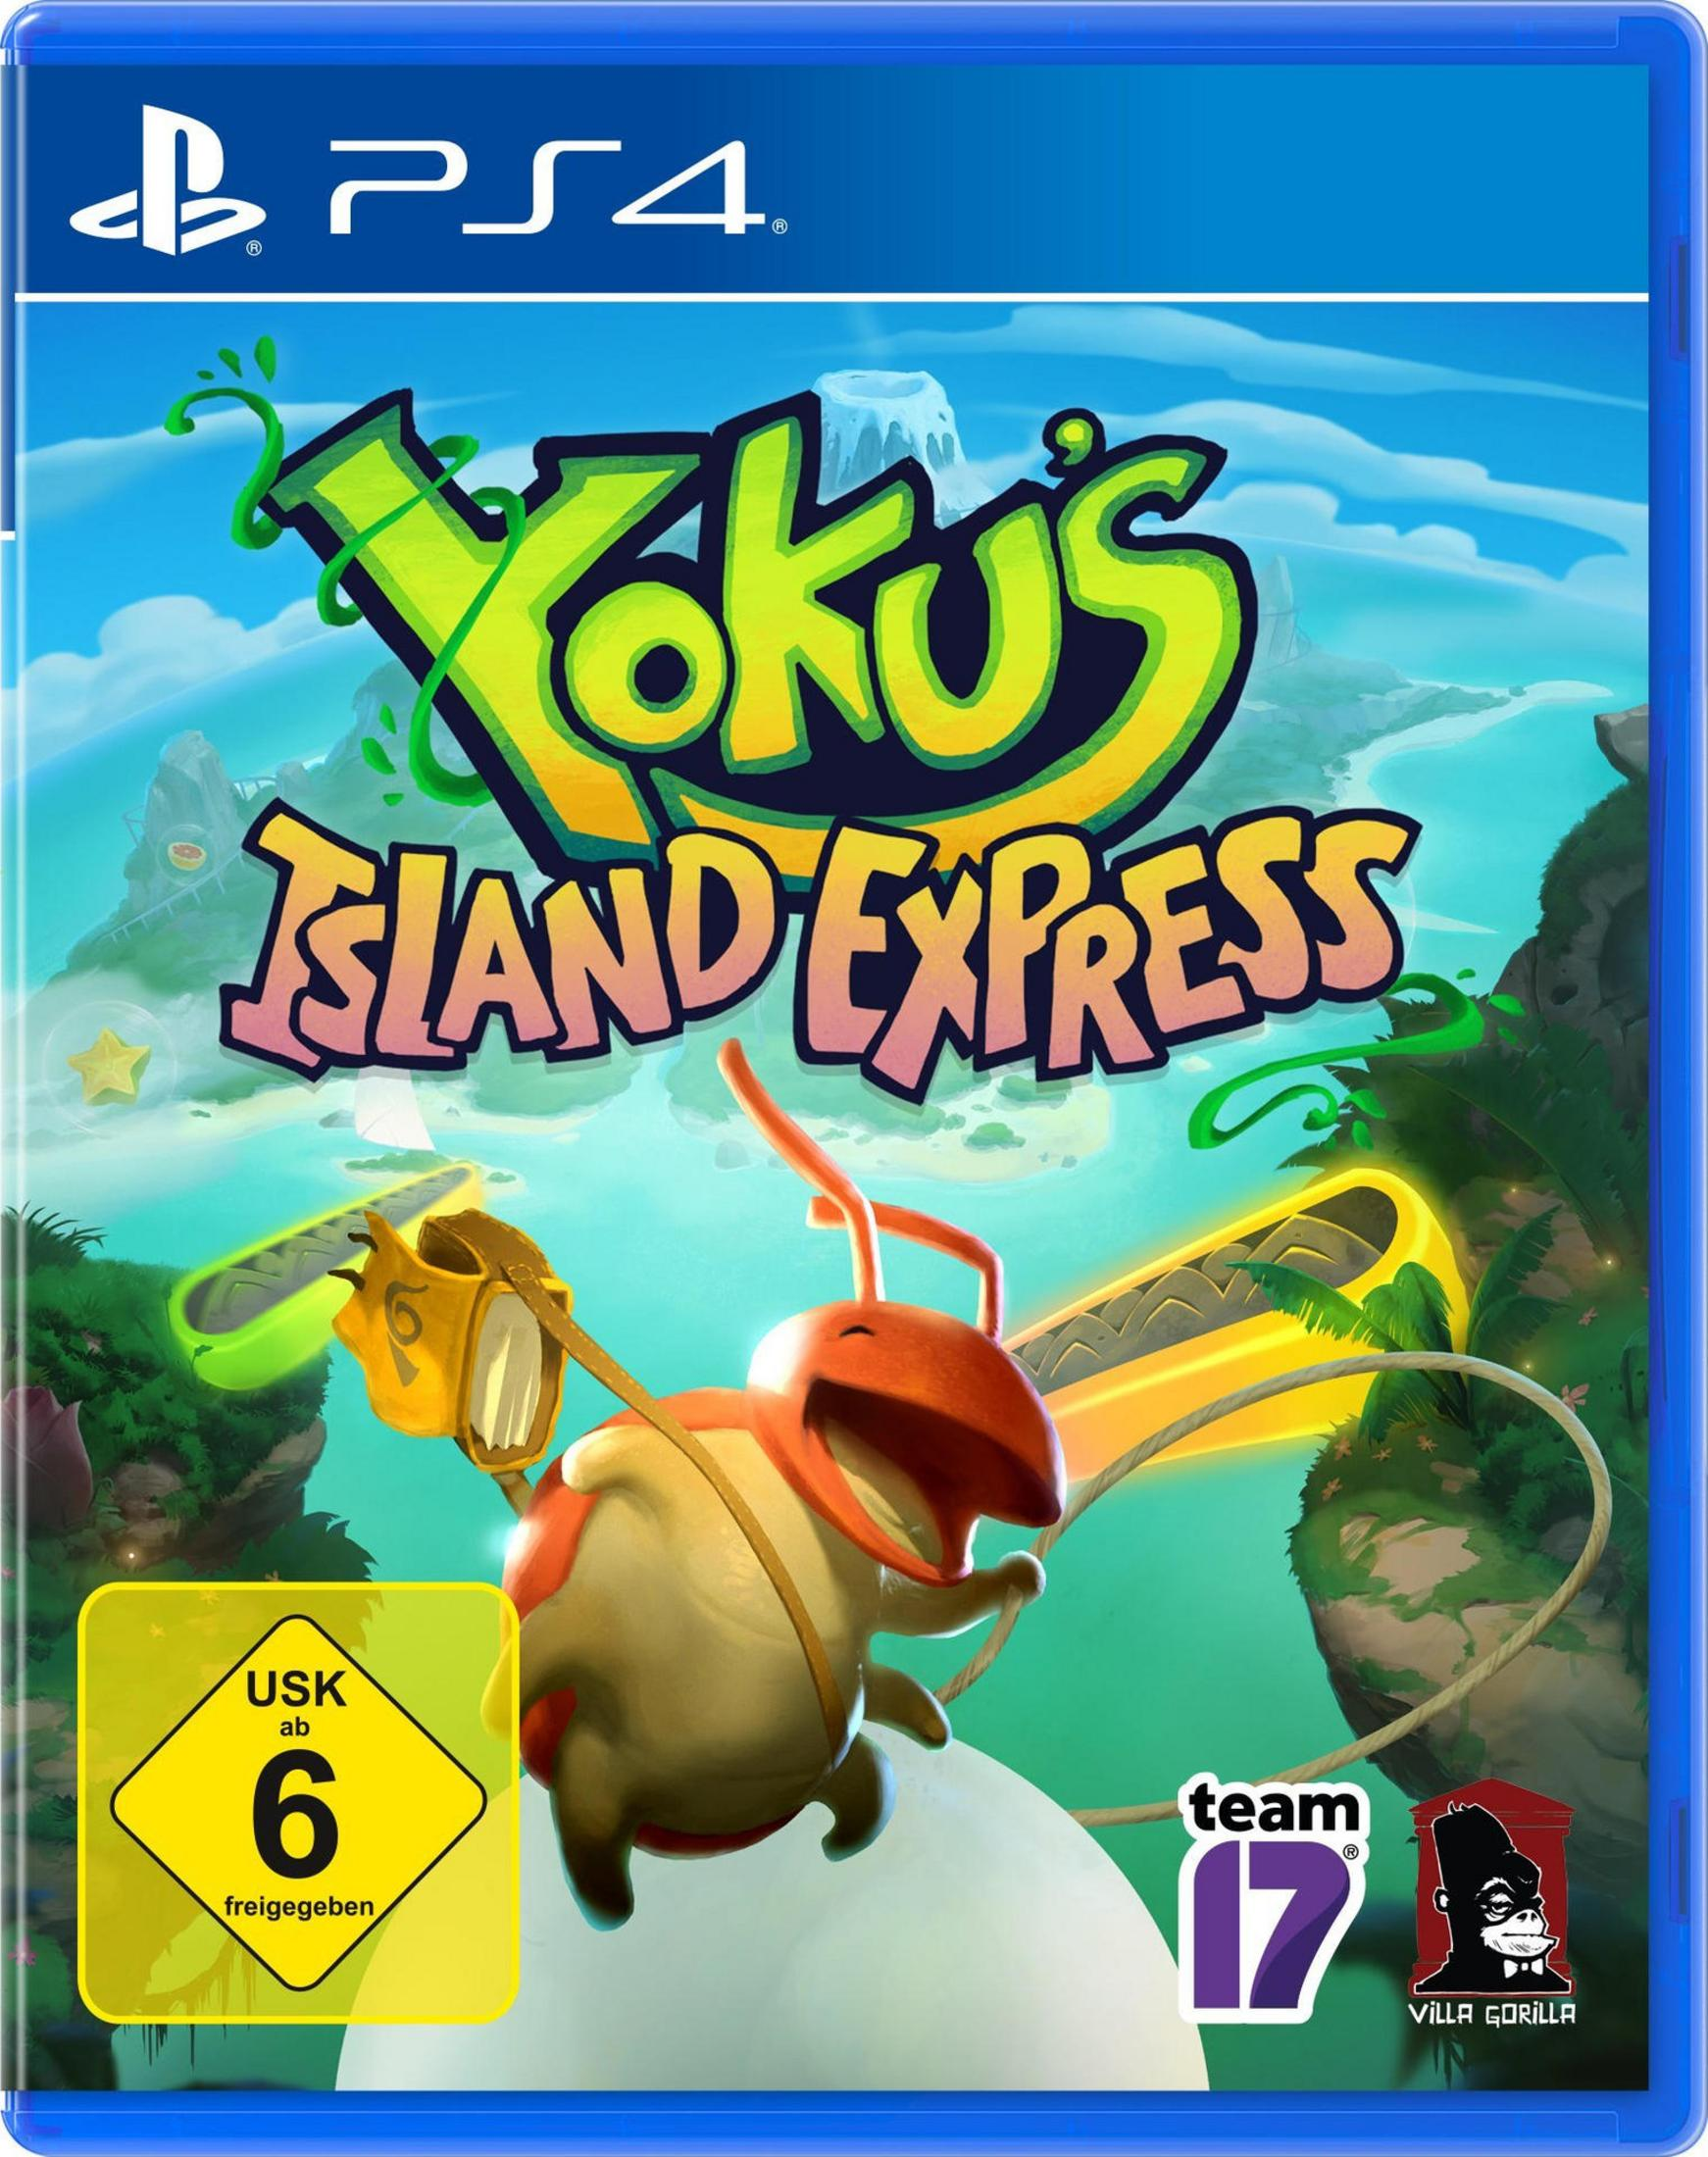 Yokus Island PS-4 Preis-Hit [PlayStation 4] 